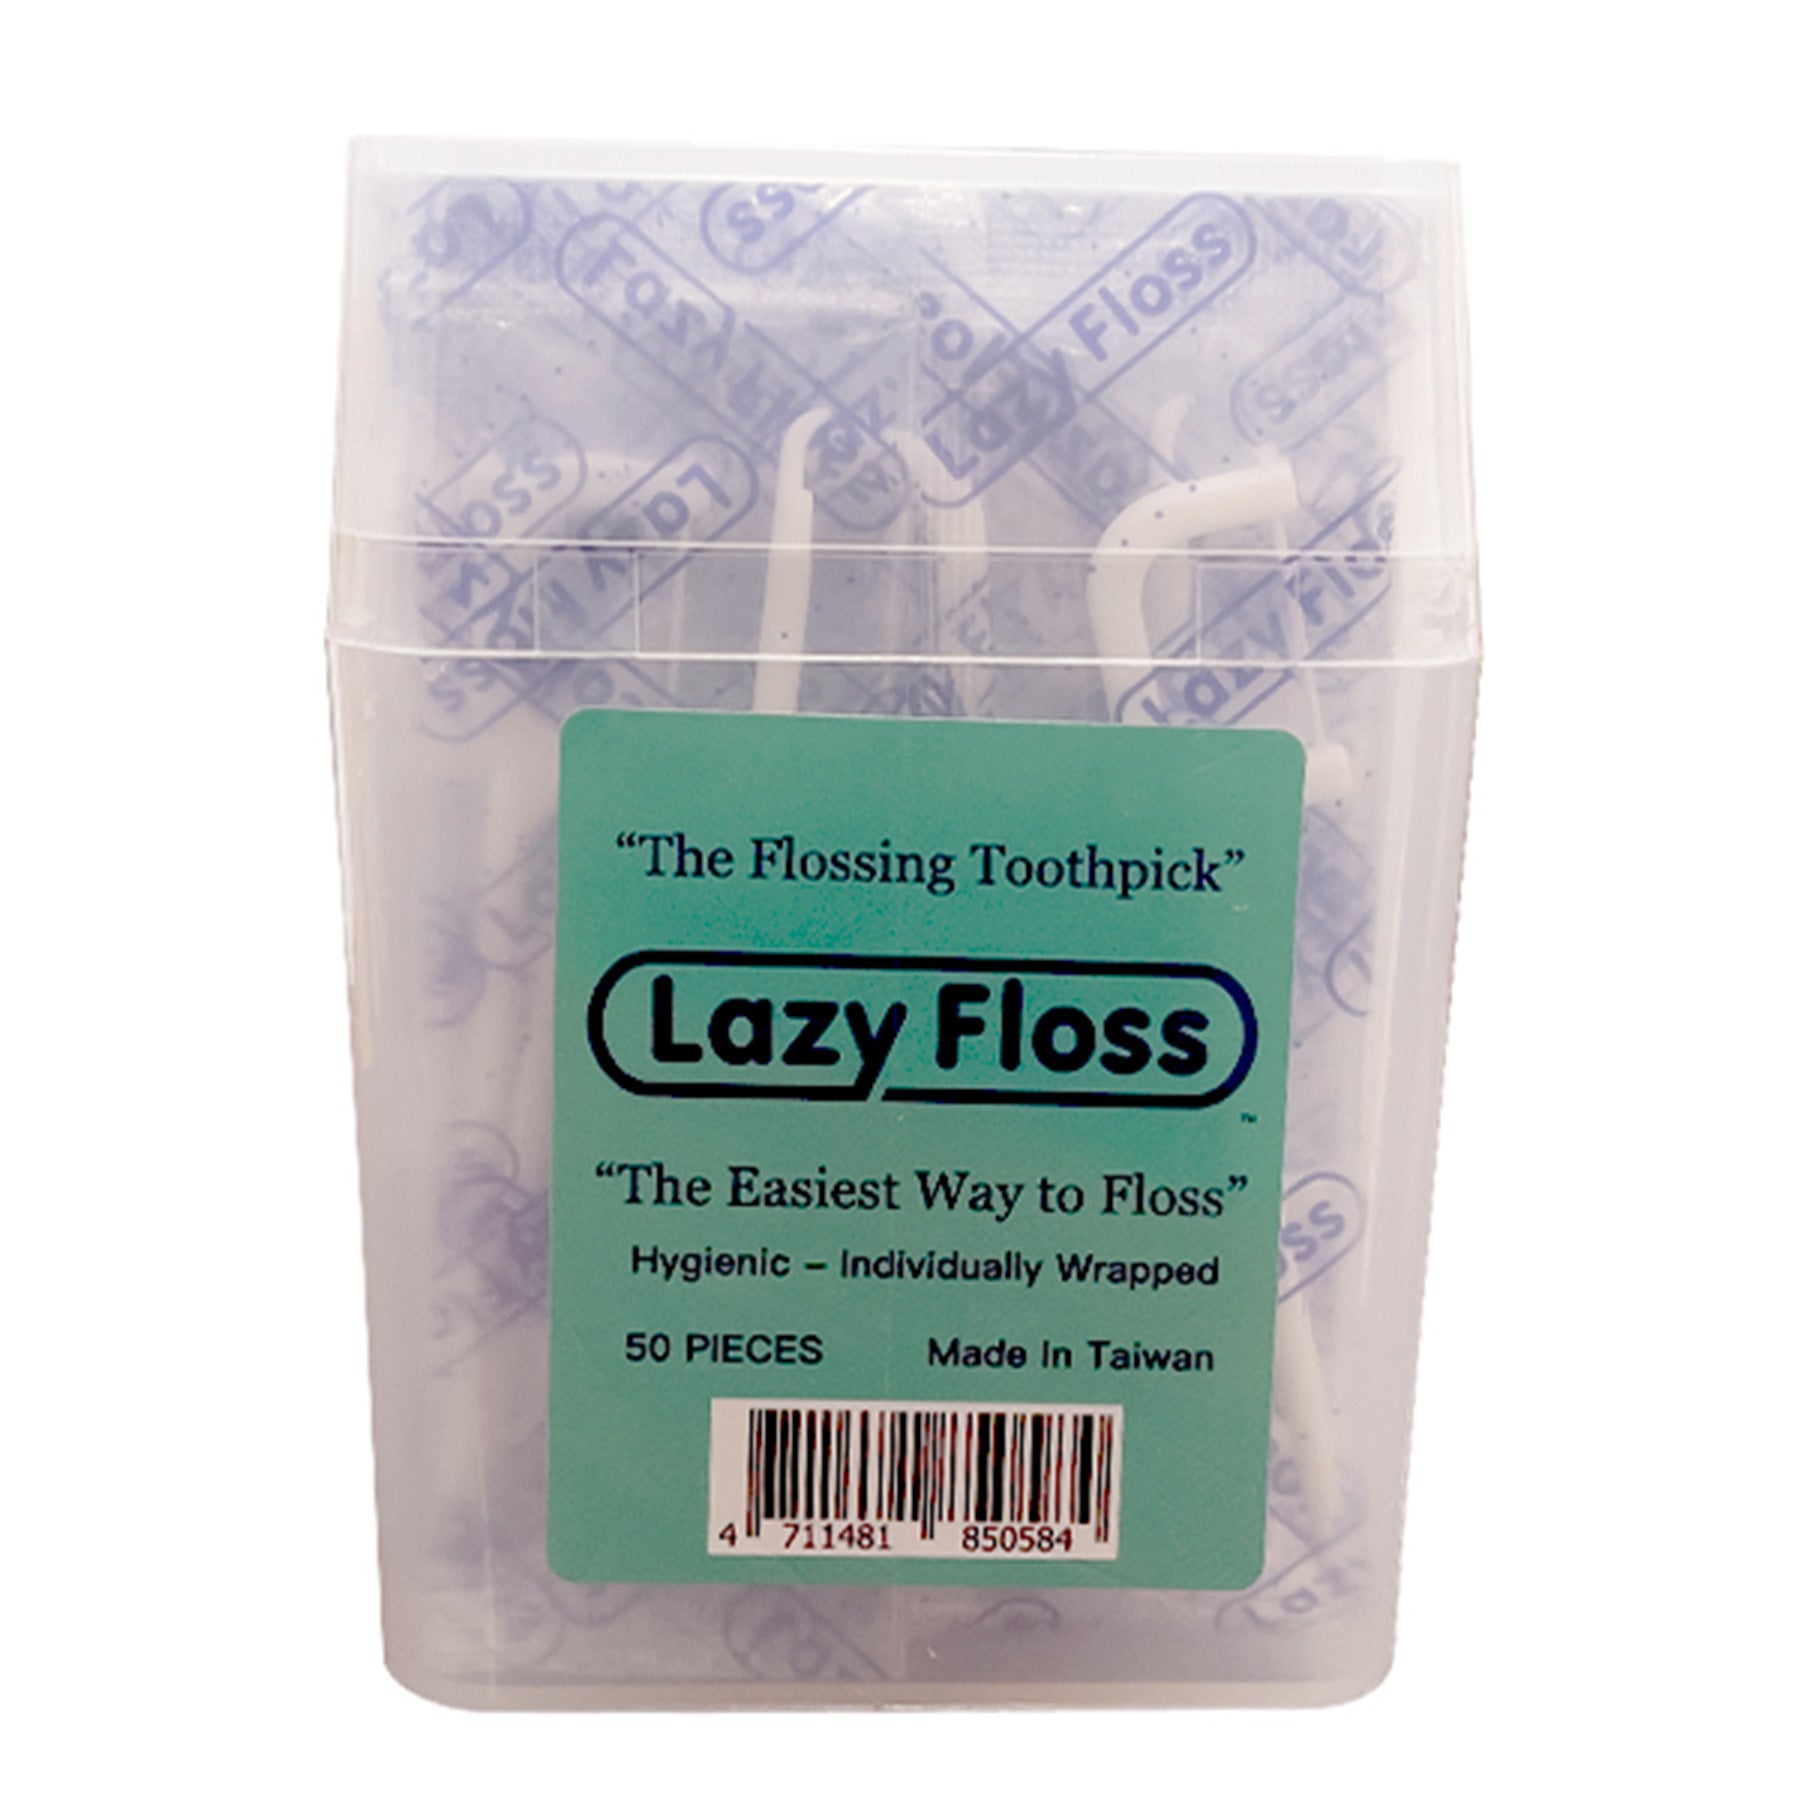 Lazy floss singly wrapped - 50 pcs